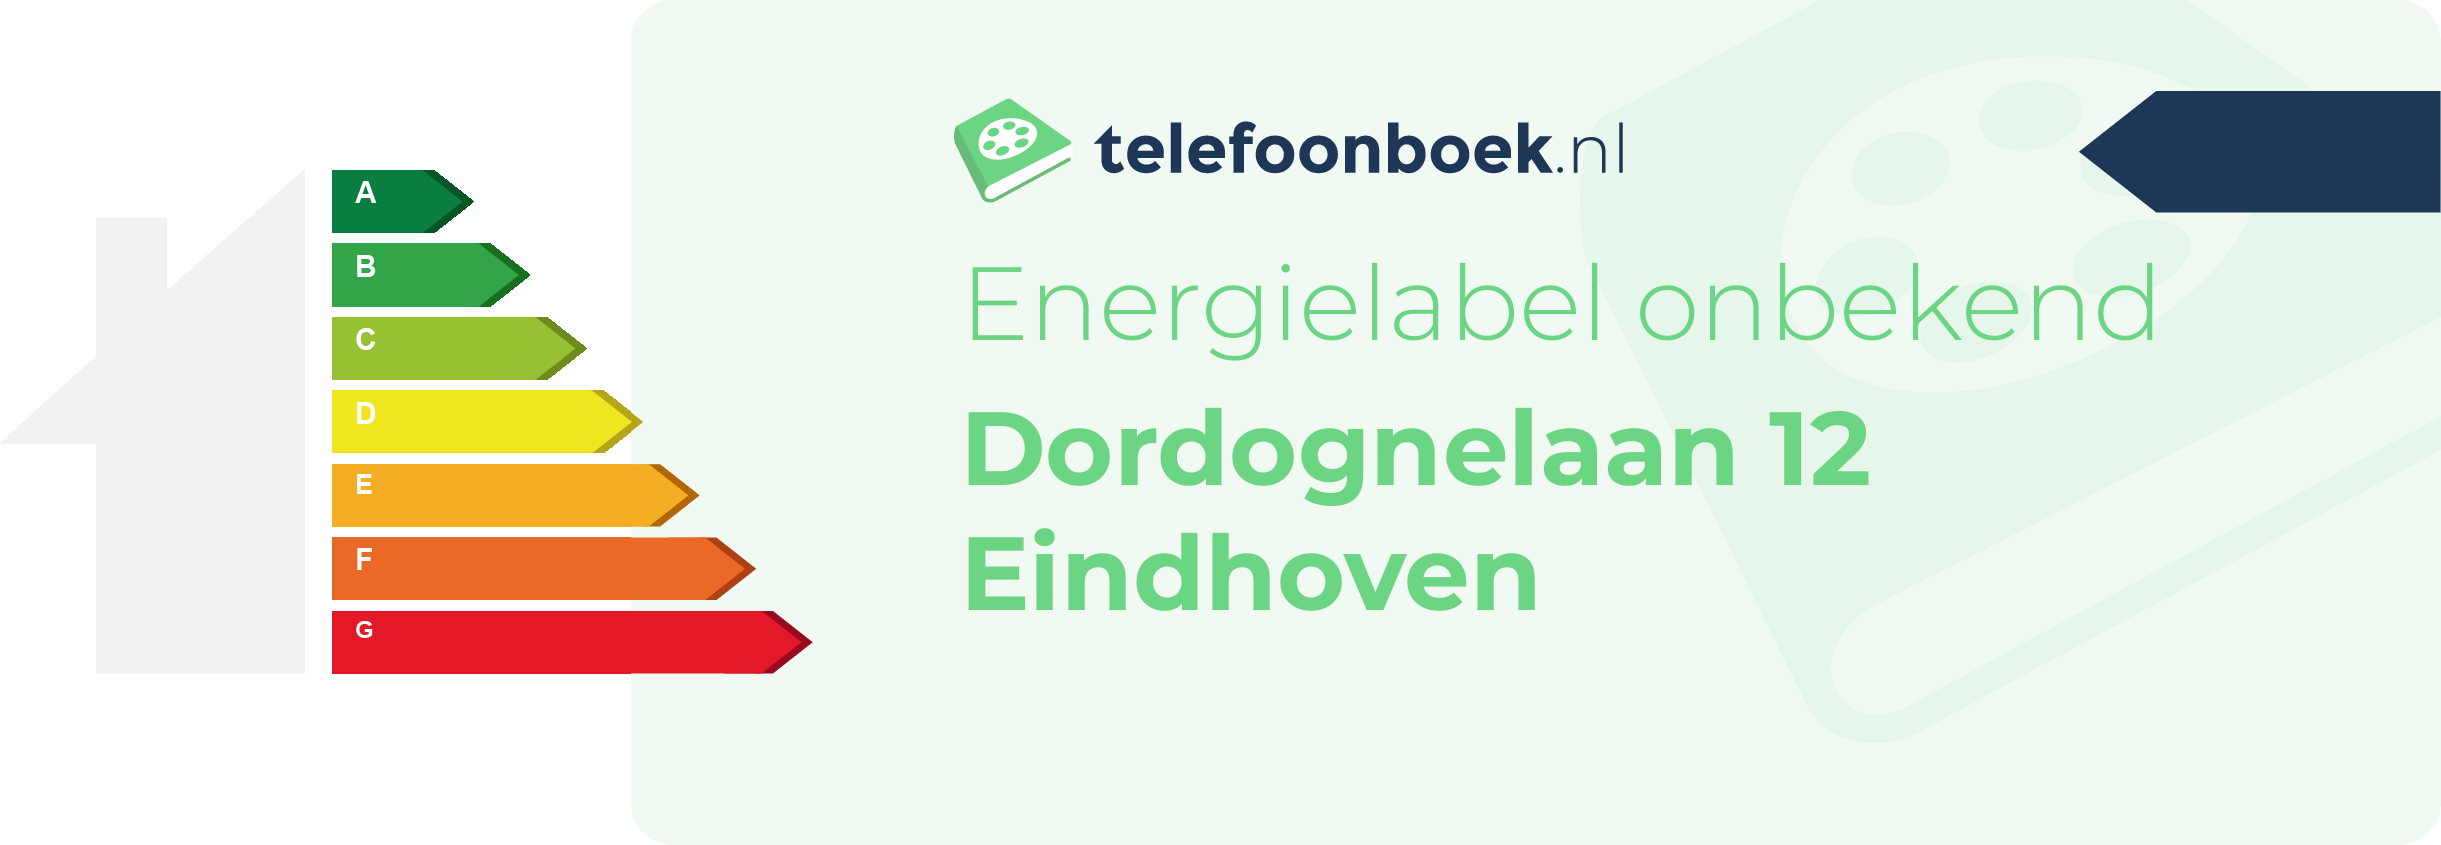 Energielabel Dordognelaan 12 Eindhoven